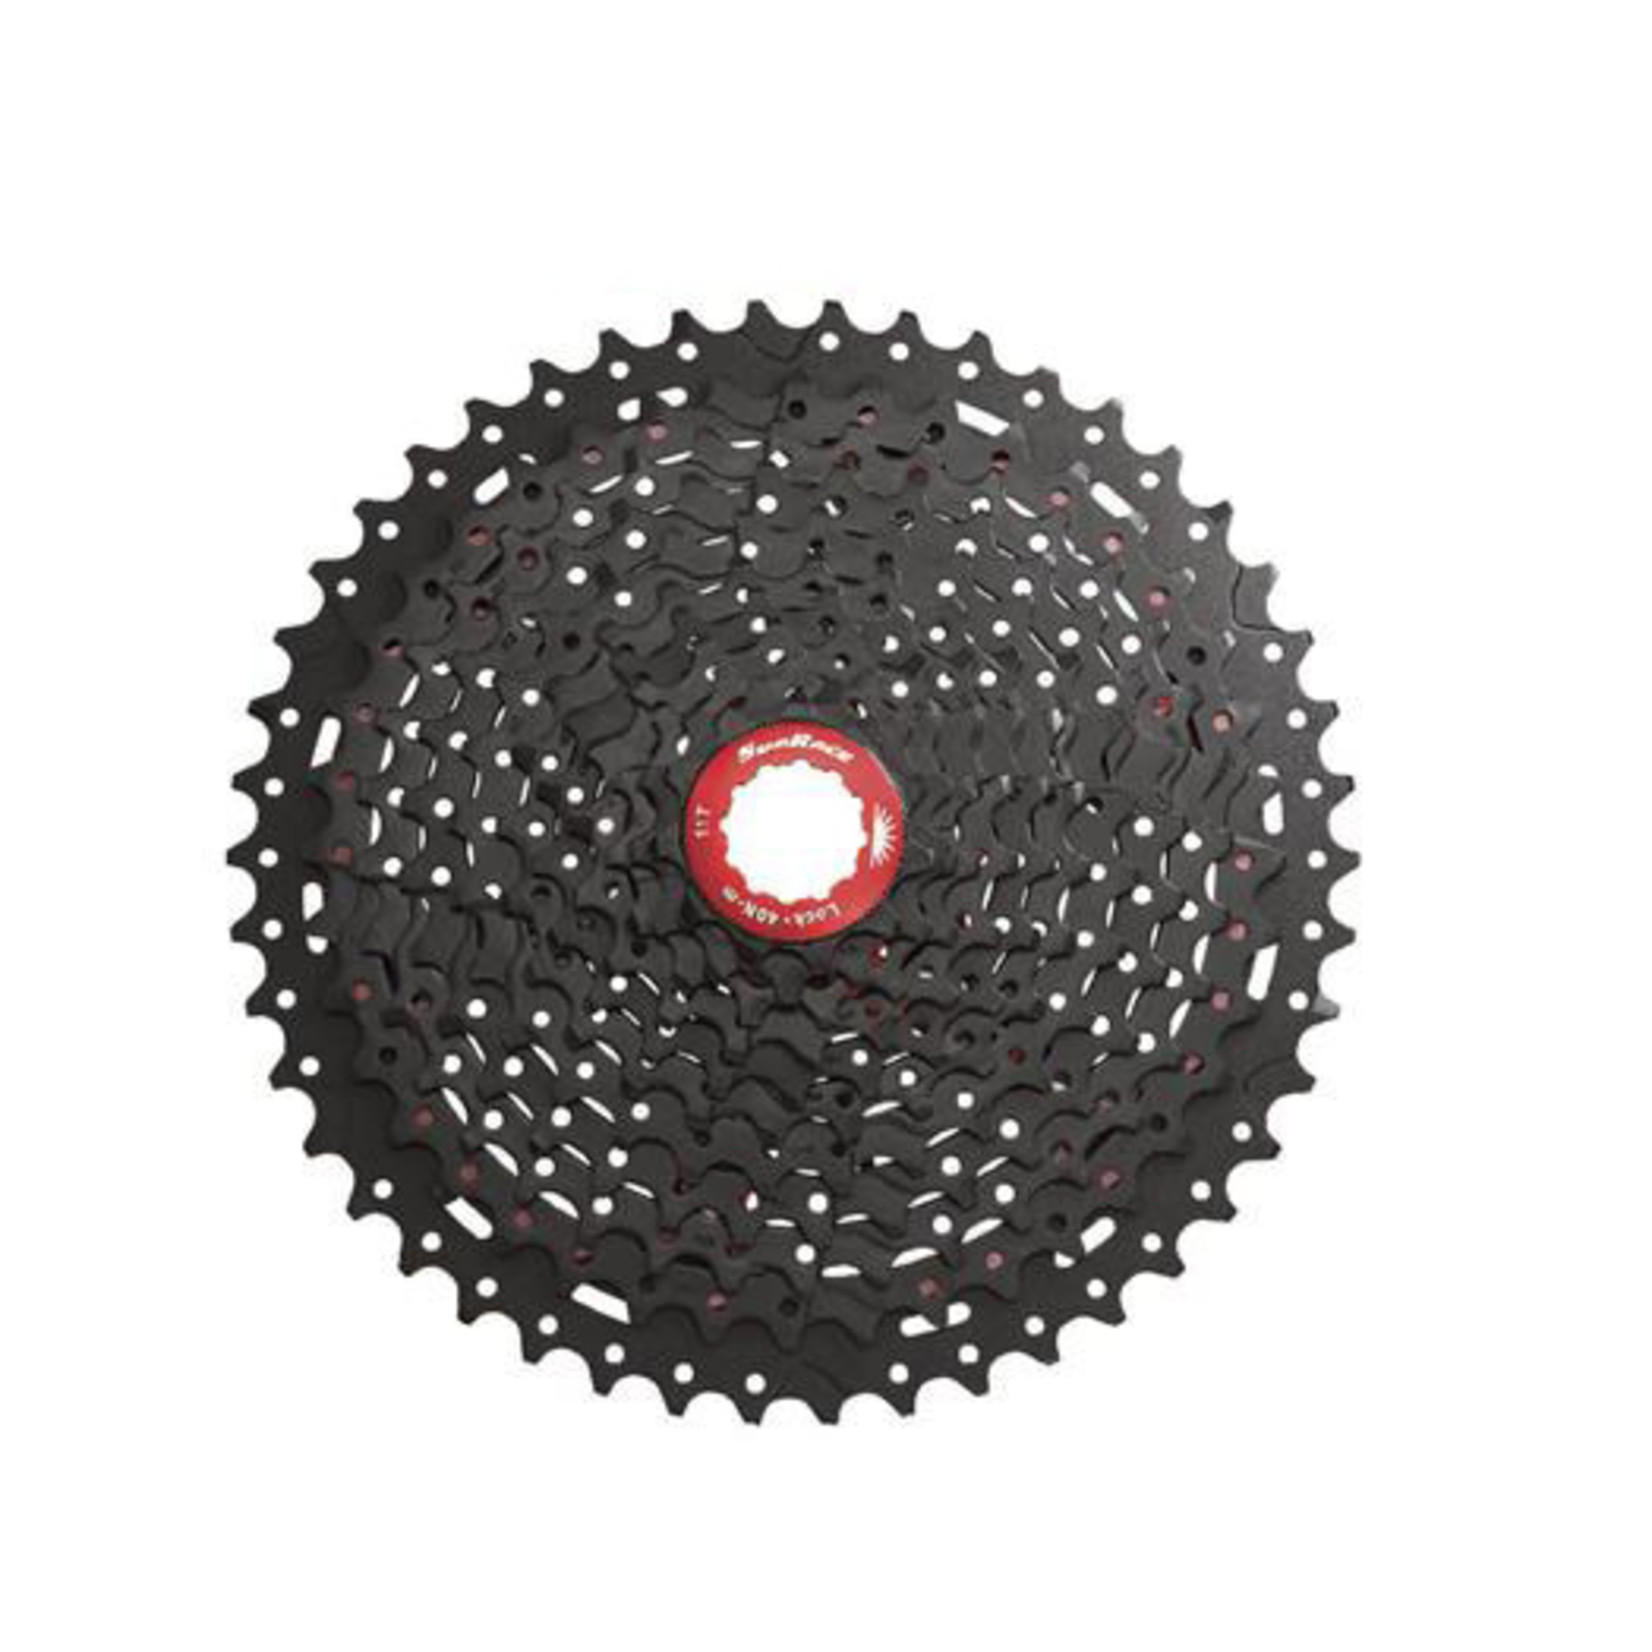 Sunrace Sunrace Bike/Cycling Cassette - MX8 - 11 Speed - 11-46T - Black